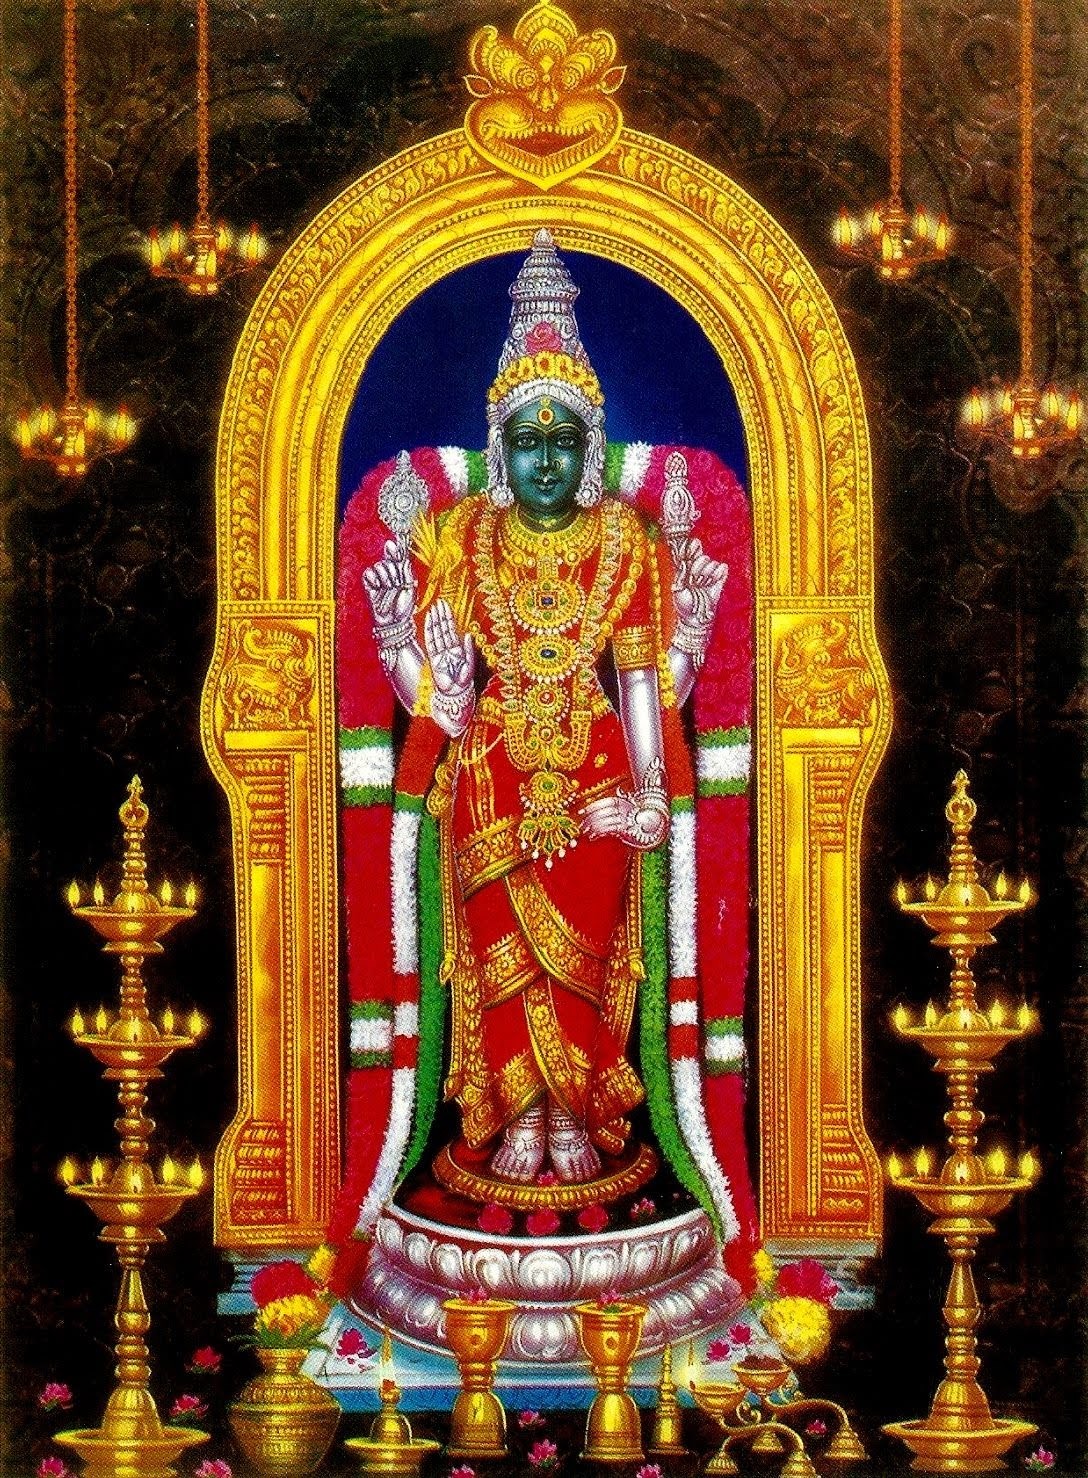 Goddess Sri Garbarakshambigai Amman